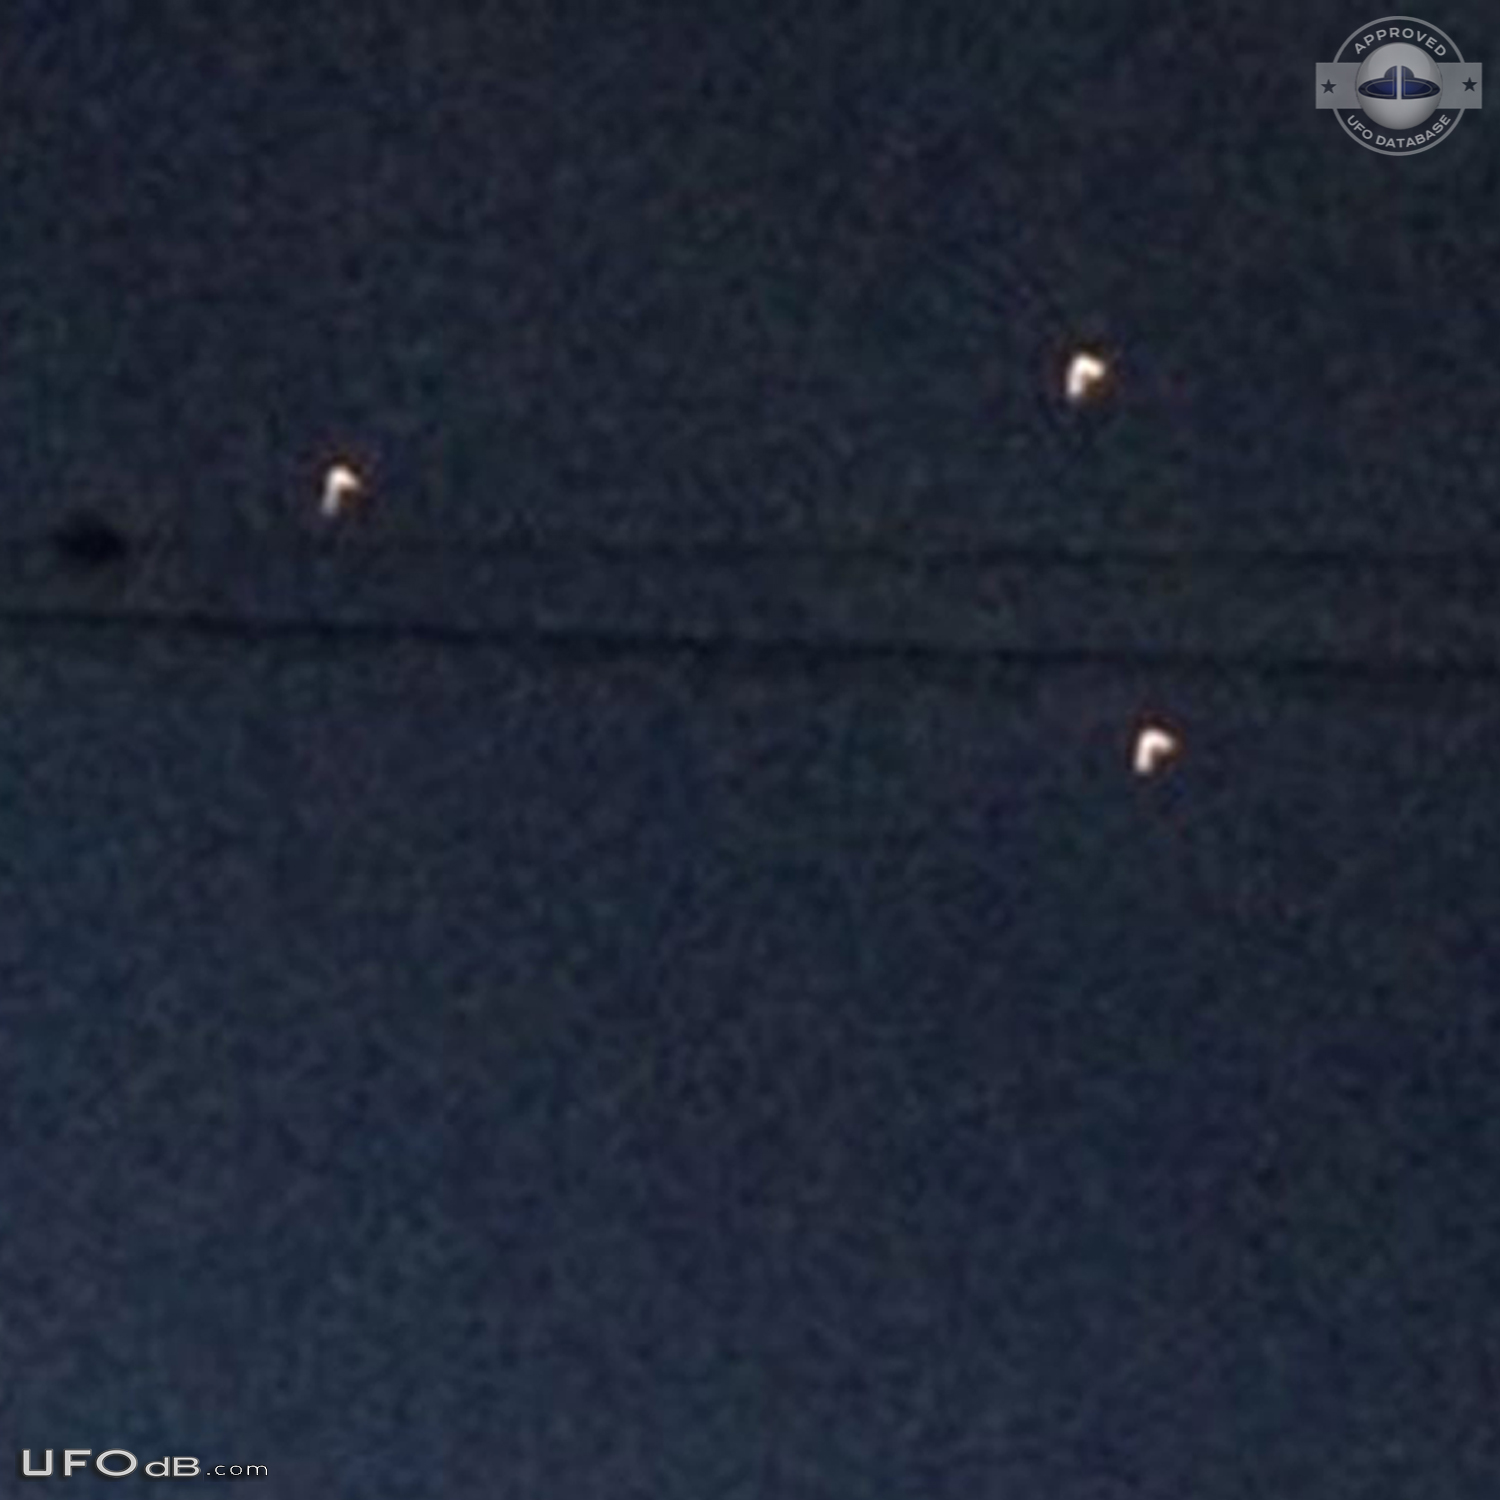 Triangle formation Orange UFOs over Grover beach, California USA 2014 UFO Picture #652-4